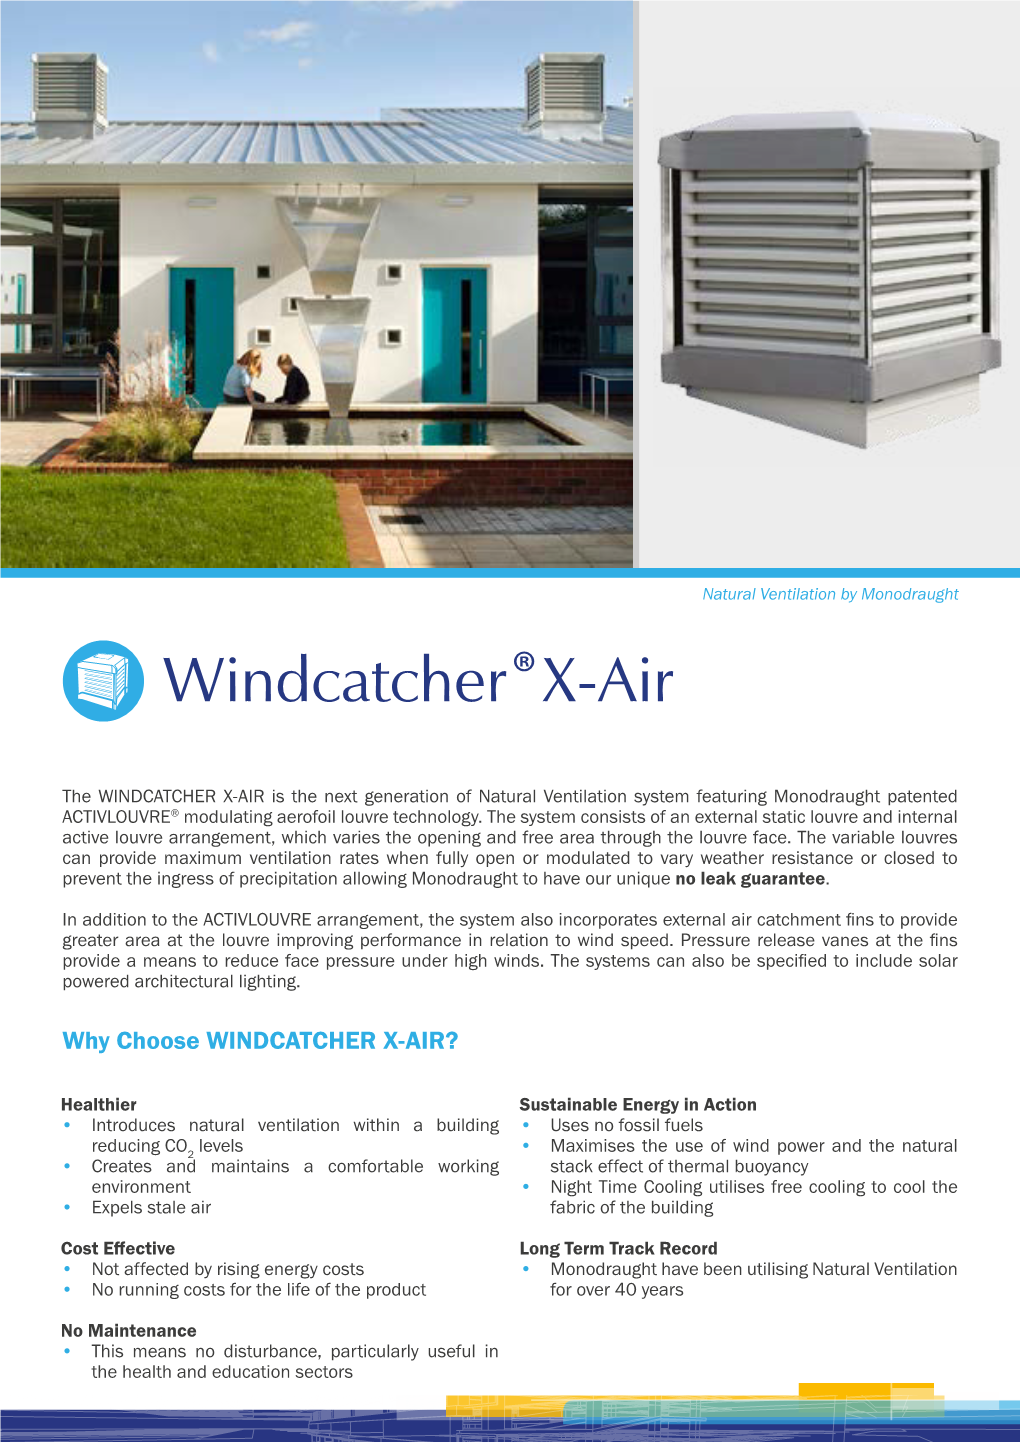 Monodraught Windcatcher X-Air